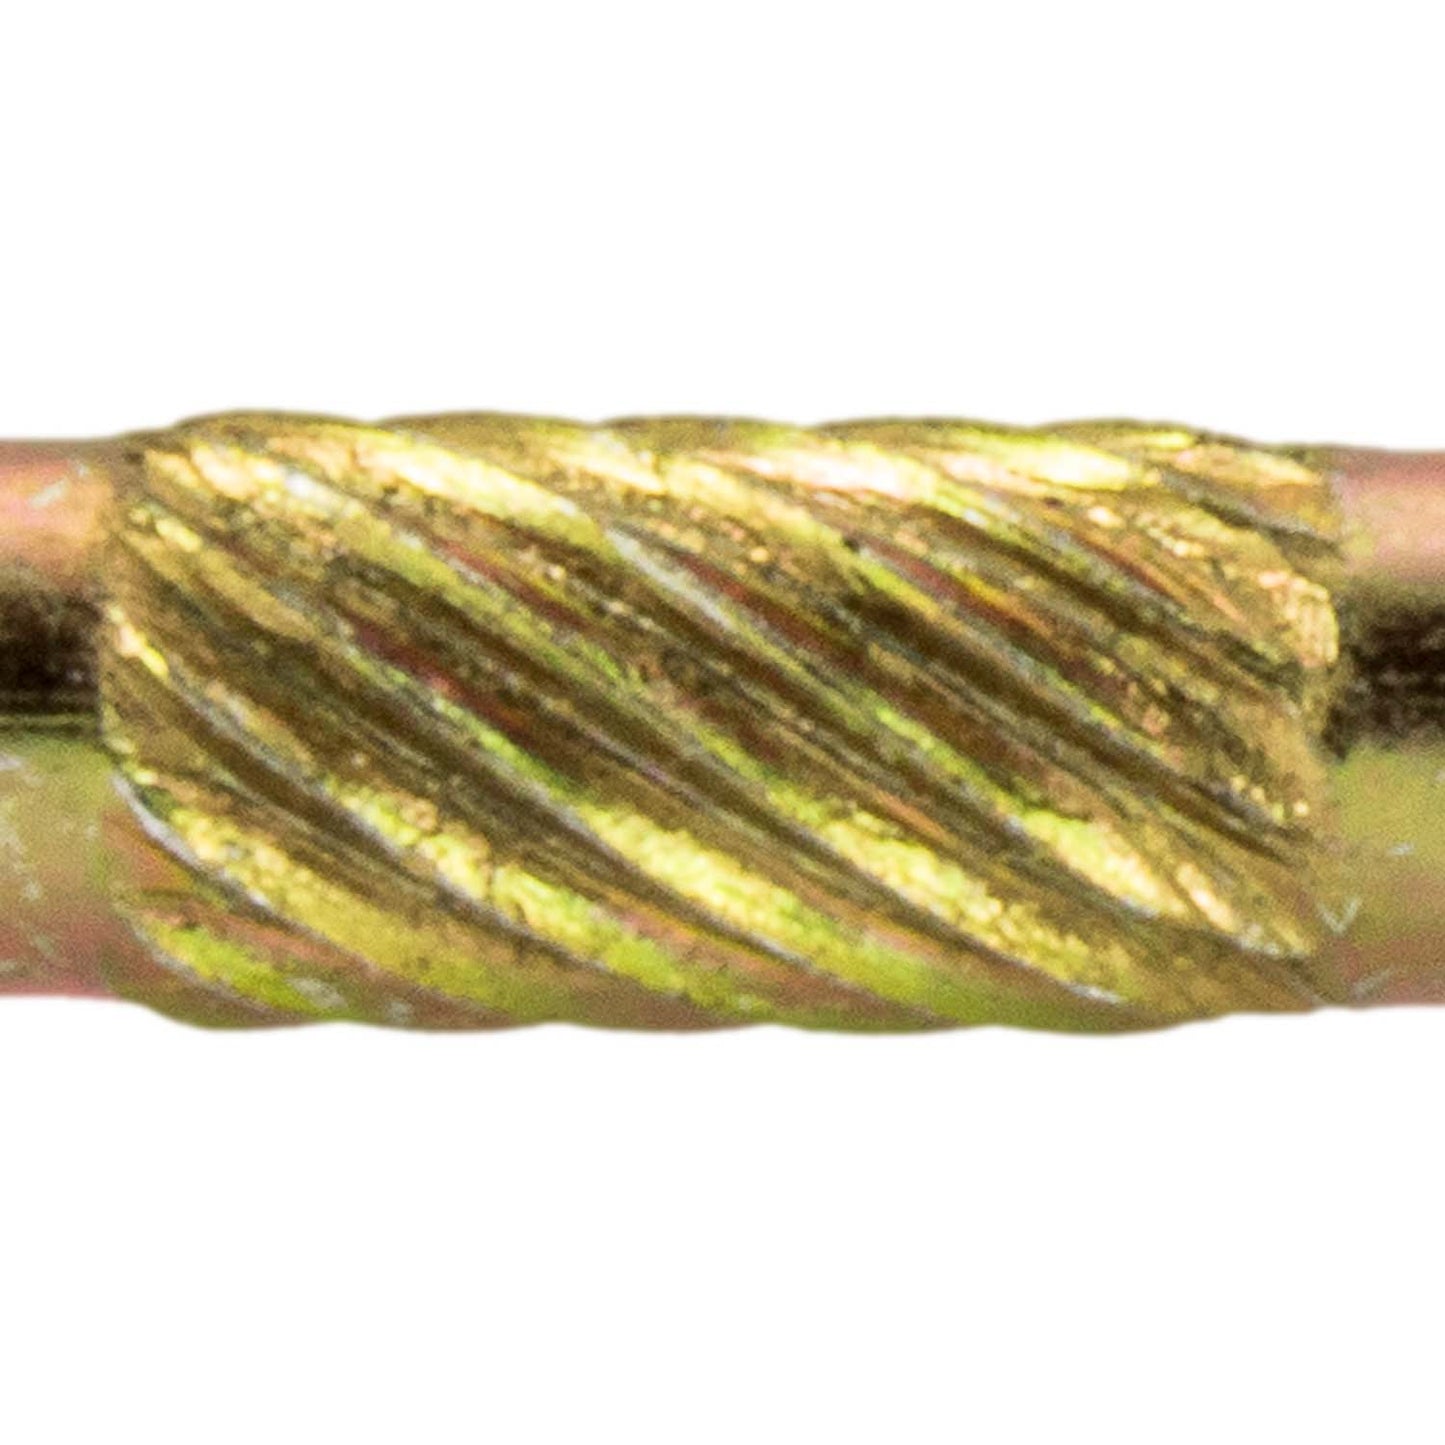 #8 Yellow Zinc Coated General Purpose Wood Screws. Torx/Star Drive Head - Multipurpose Torx/Star Drive Wood Screws